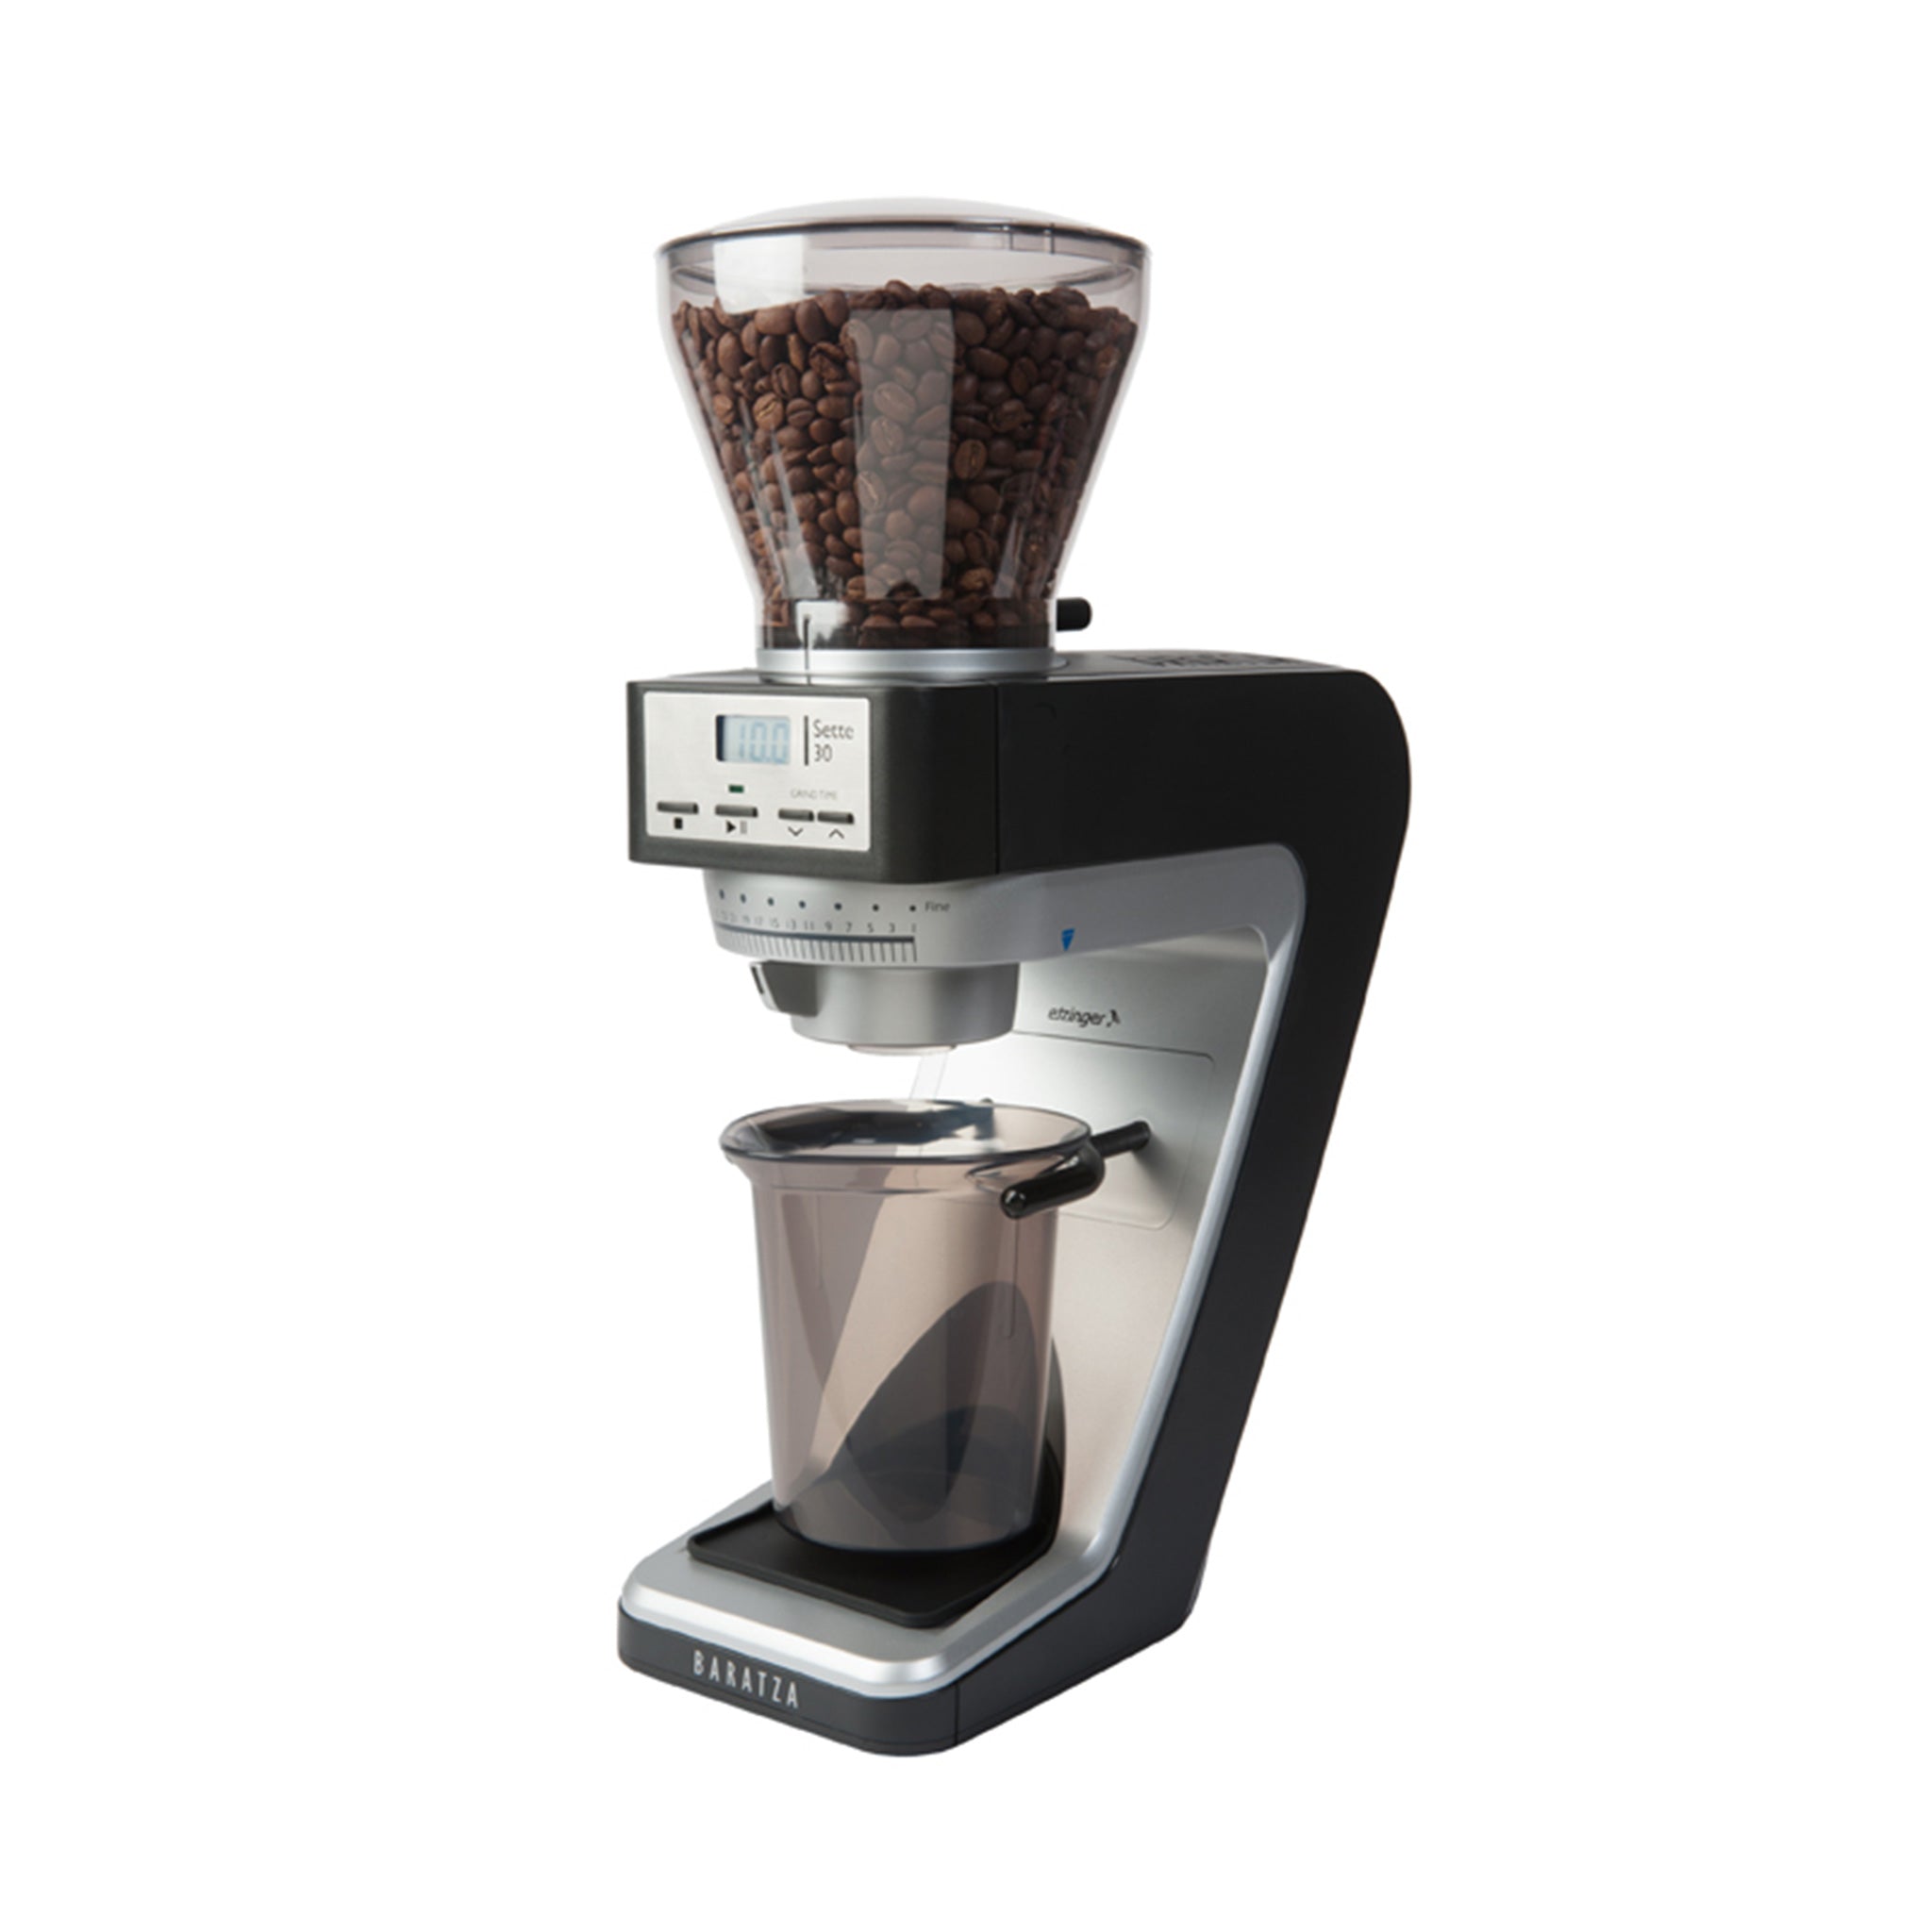 Baratza Coffee Grinder Review